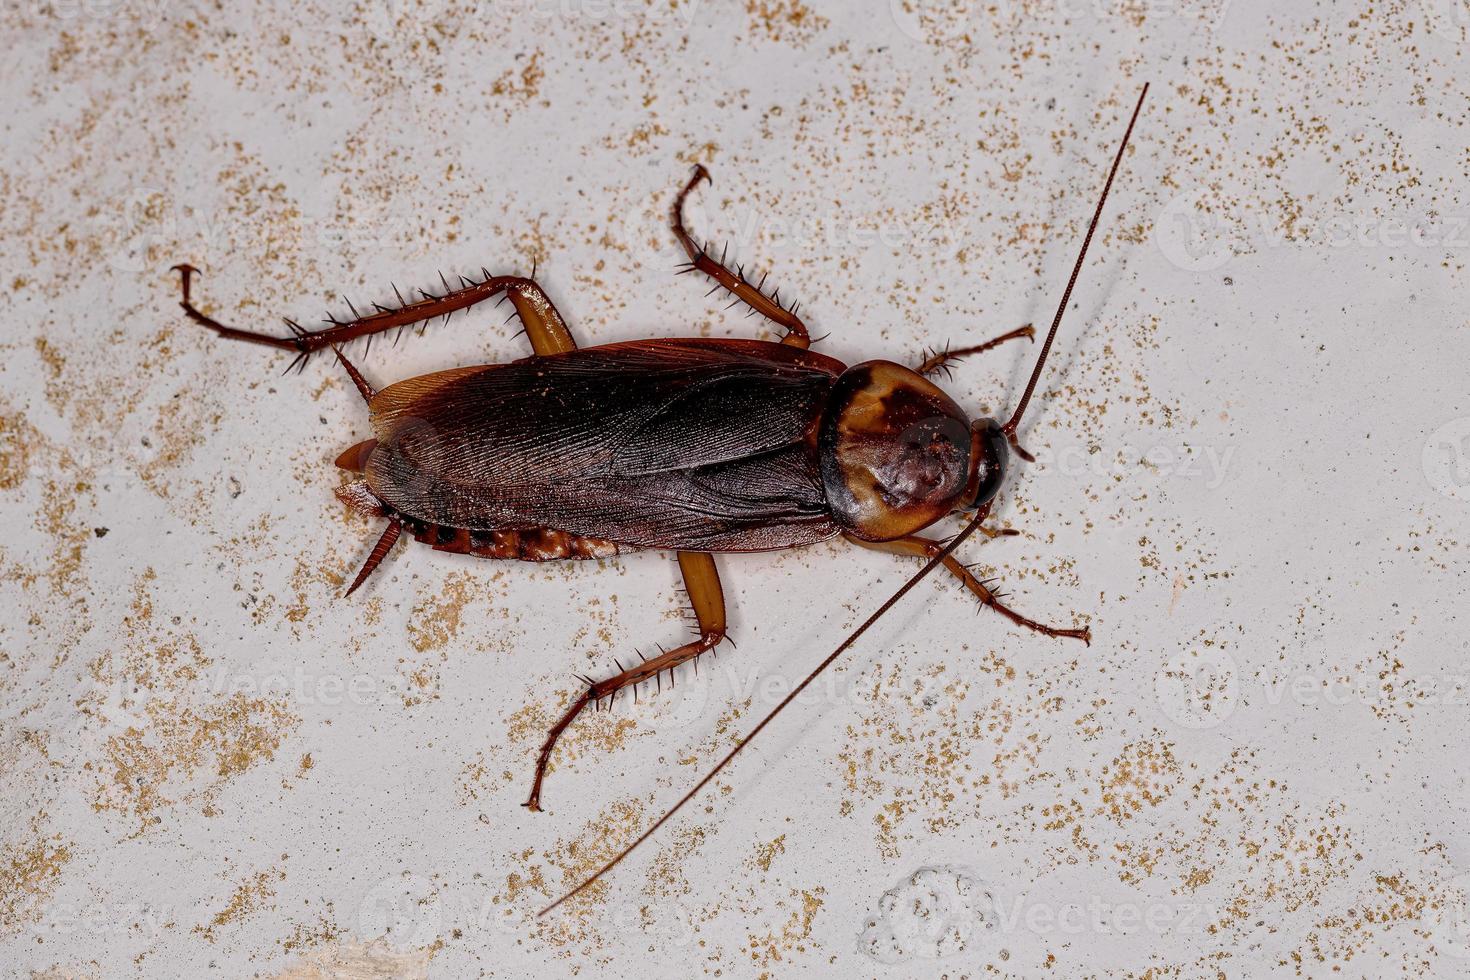 cucaracha americana adulta foto